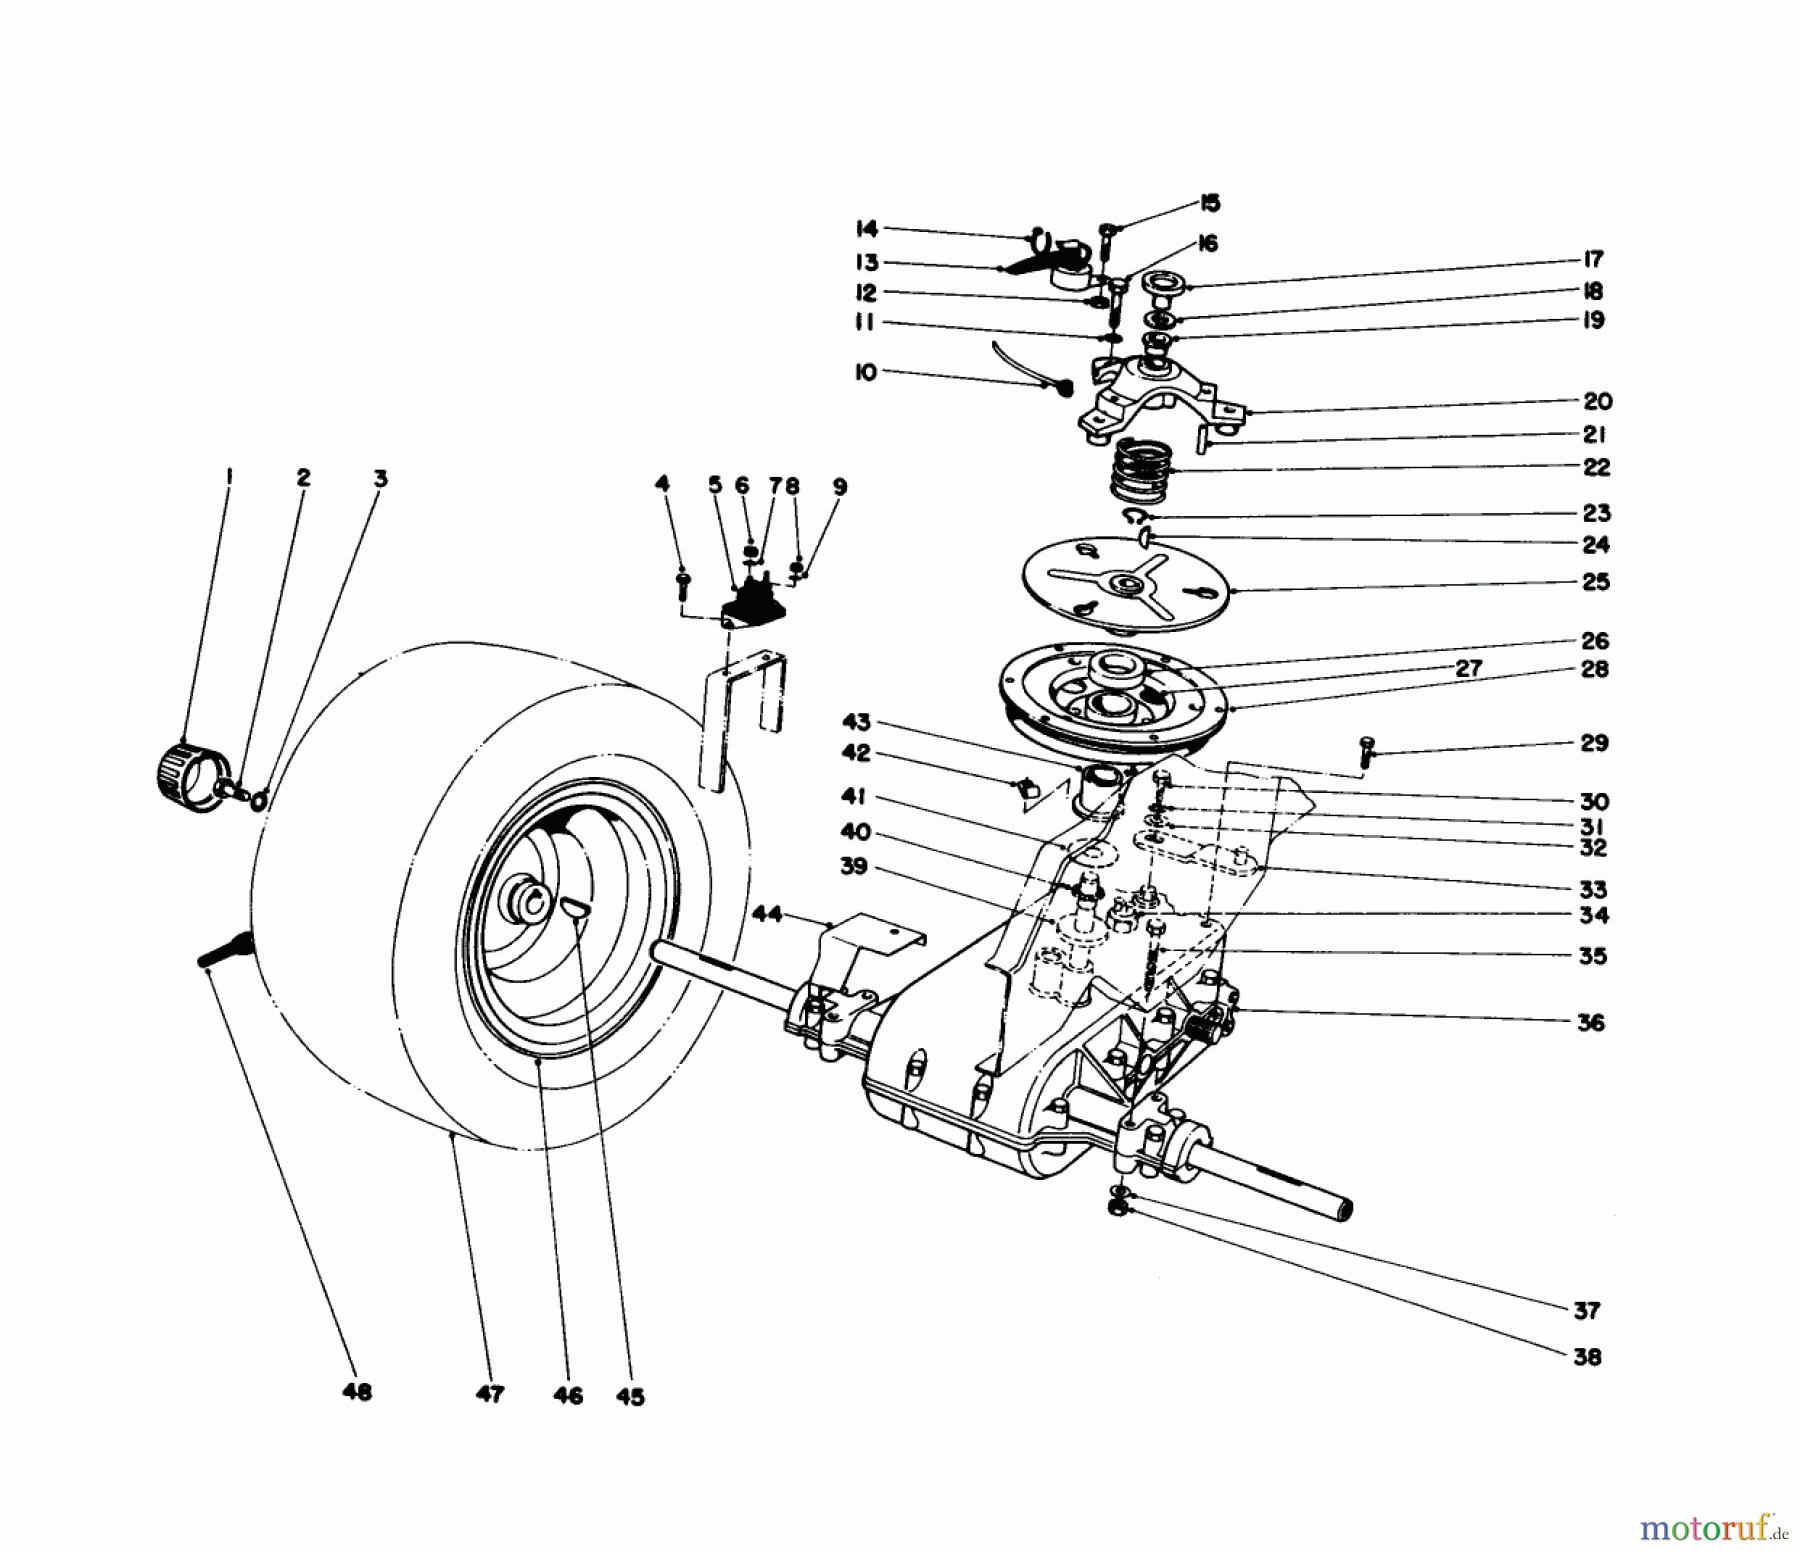  Toro Neu Mowers, Lawn & Garden Tractor Seite 1 57300 (8-32) - Toro 8-32 Front Engine Rider, 1977 (7000001-7999999) TRANSAXLE & CLUTCH ASSEMBLY